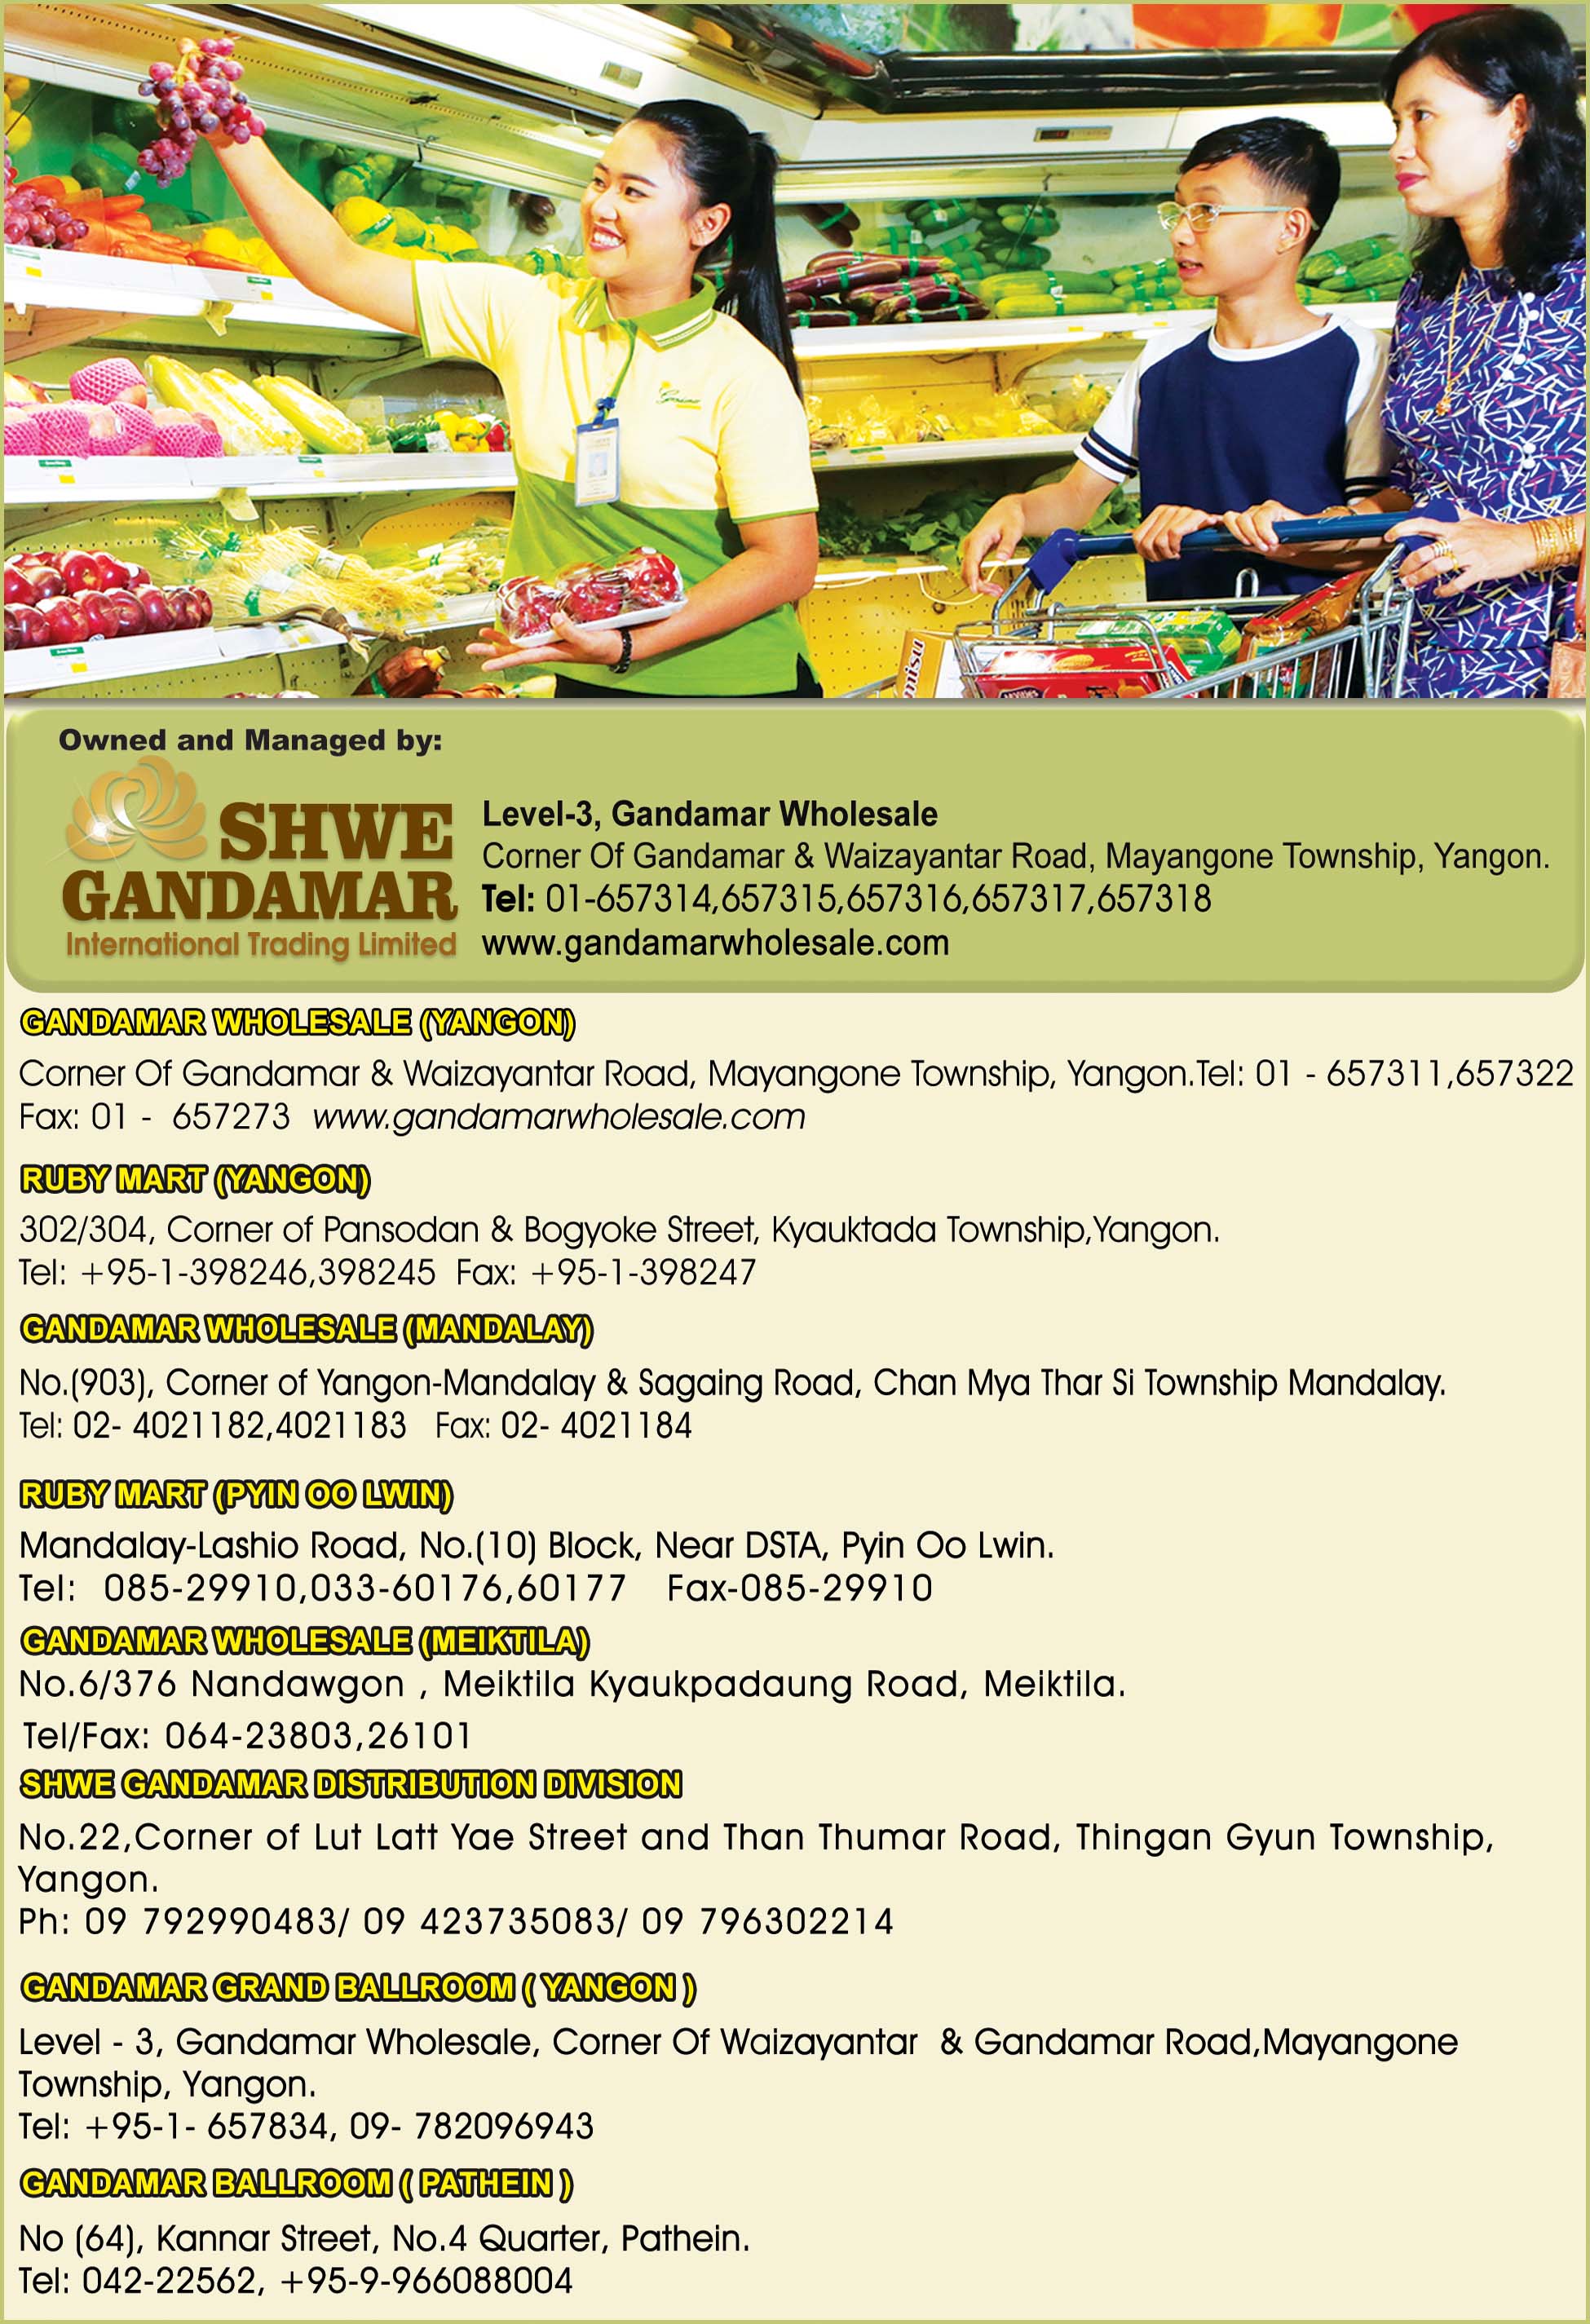 Shwe Gandamar International Trading Ltd.